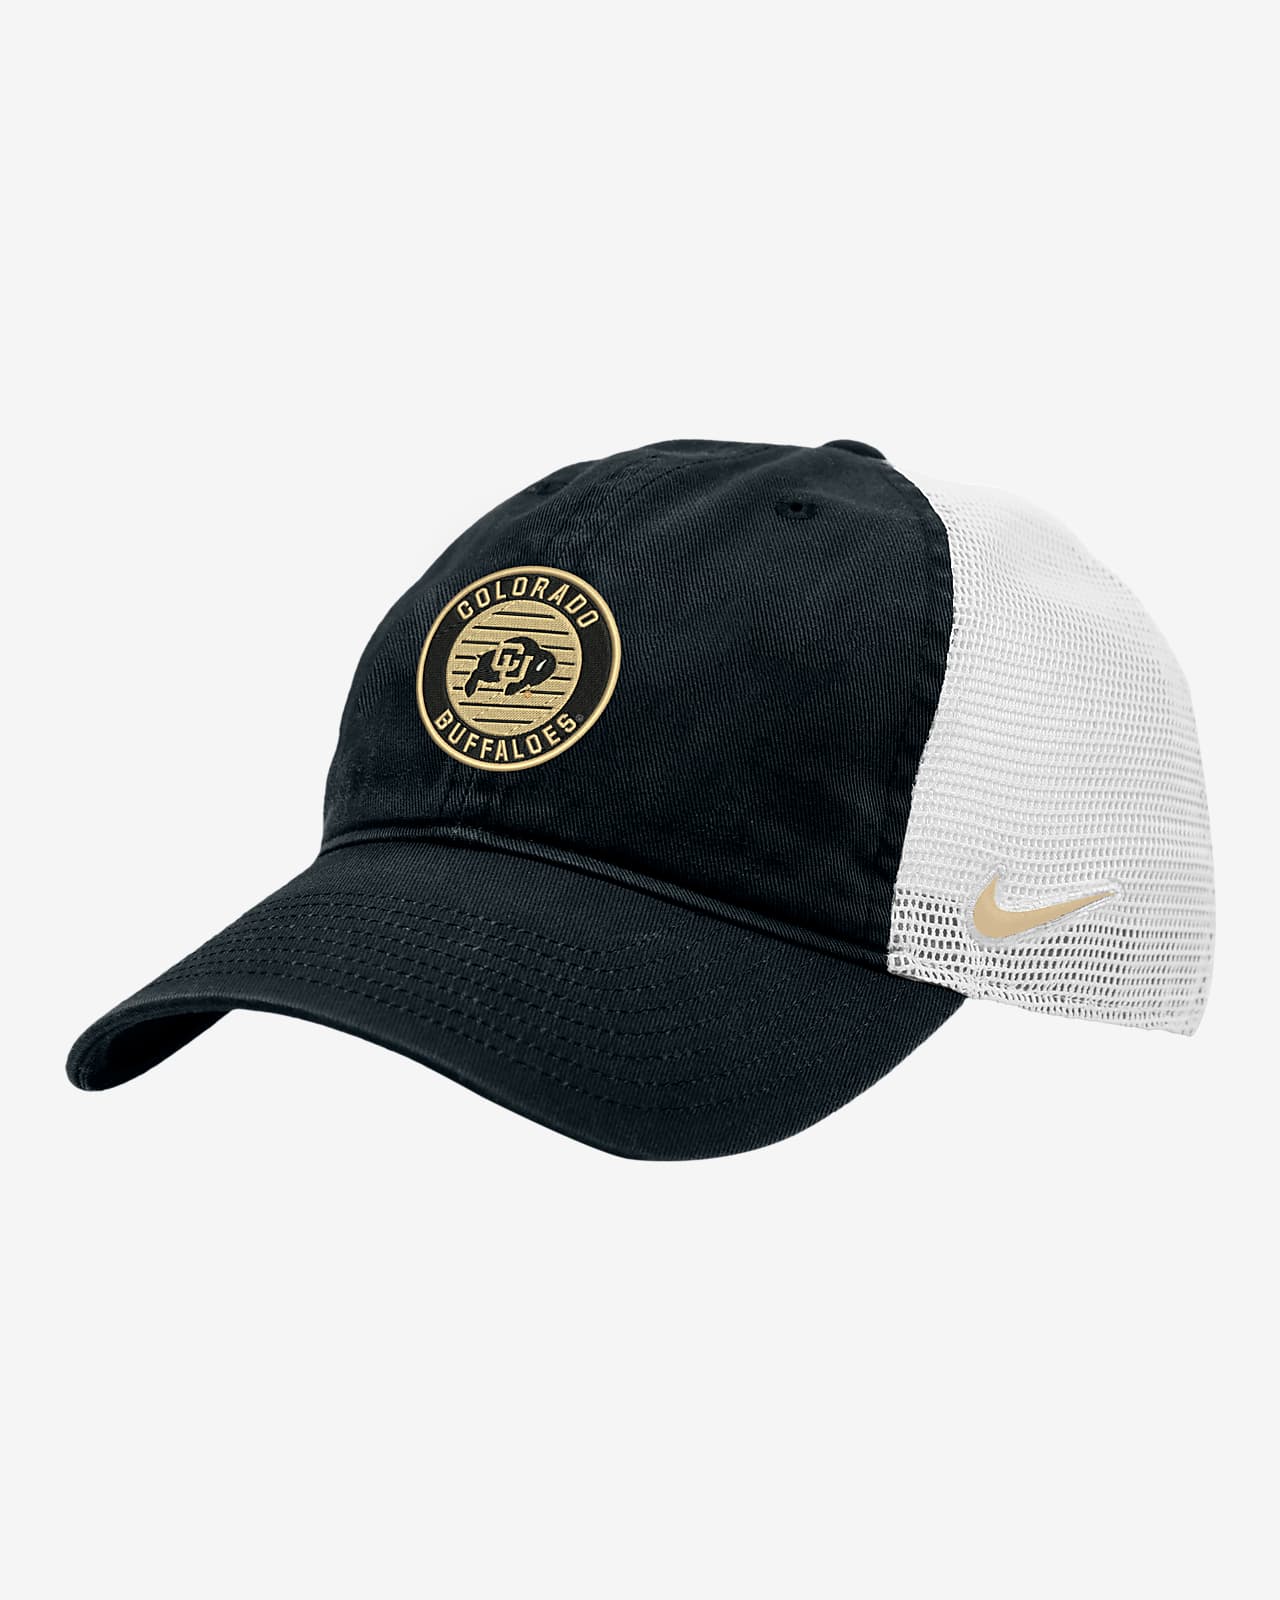 Colorado Heritage86 Nike College Trucker Hat